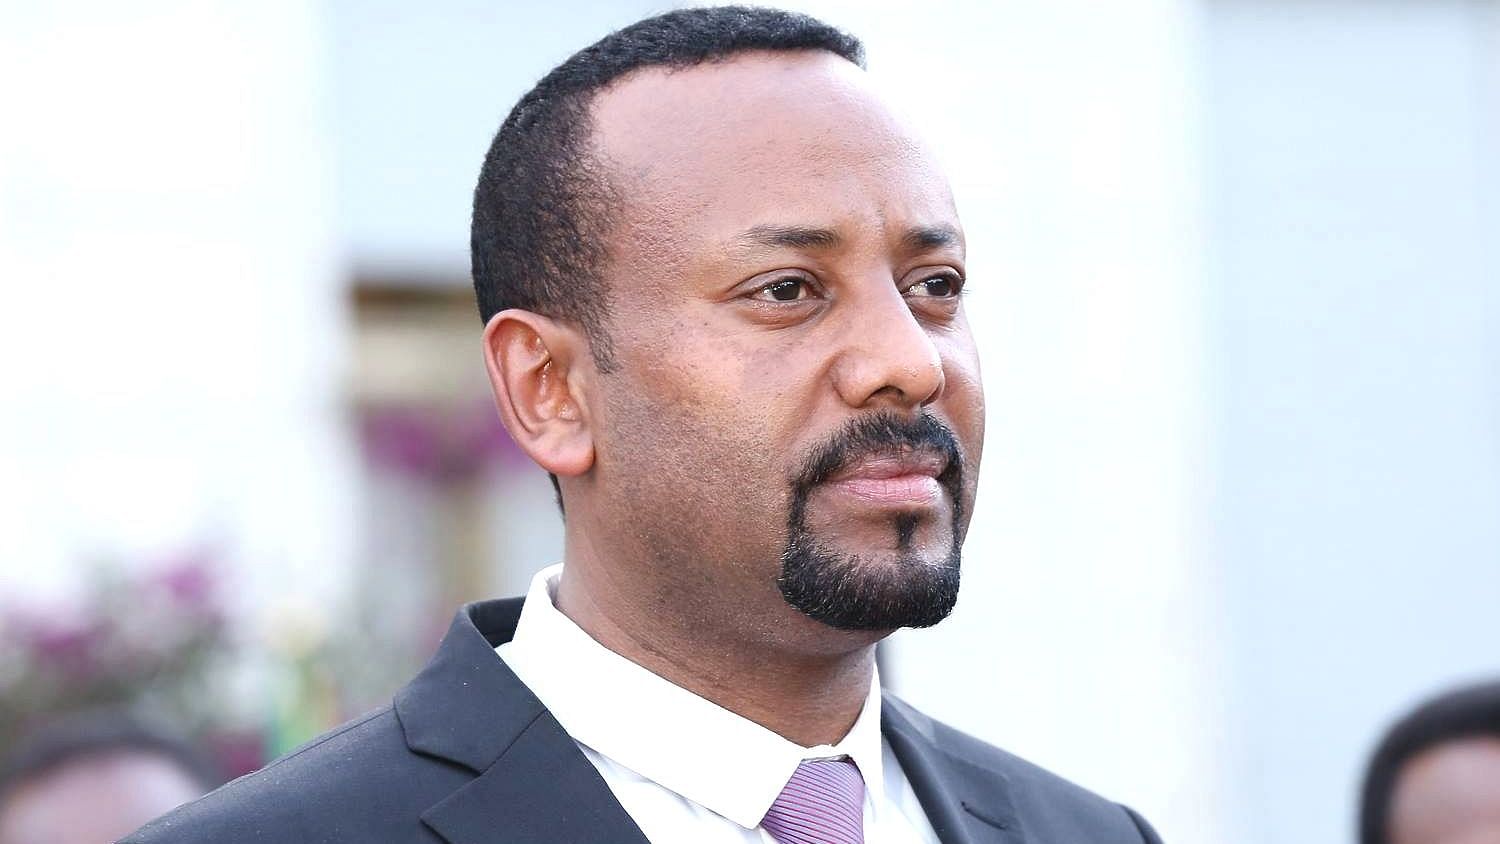 <div class="paragraphs"><p>Ethiopian Prime Minister Abiy Ahmed Ali. Image used for representational purposes.&nbsp;</p></div>